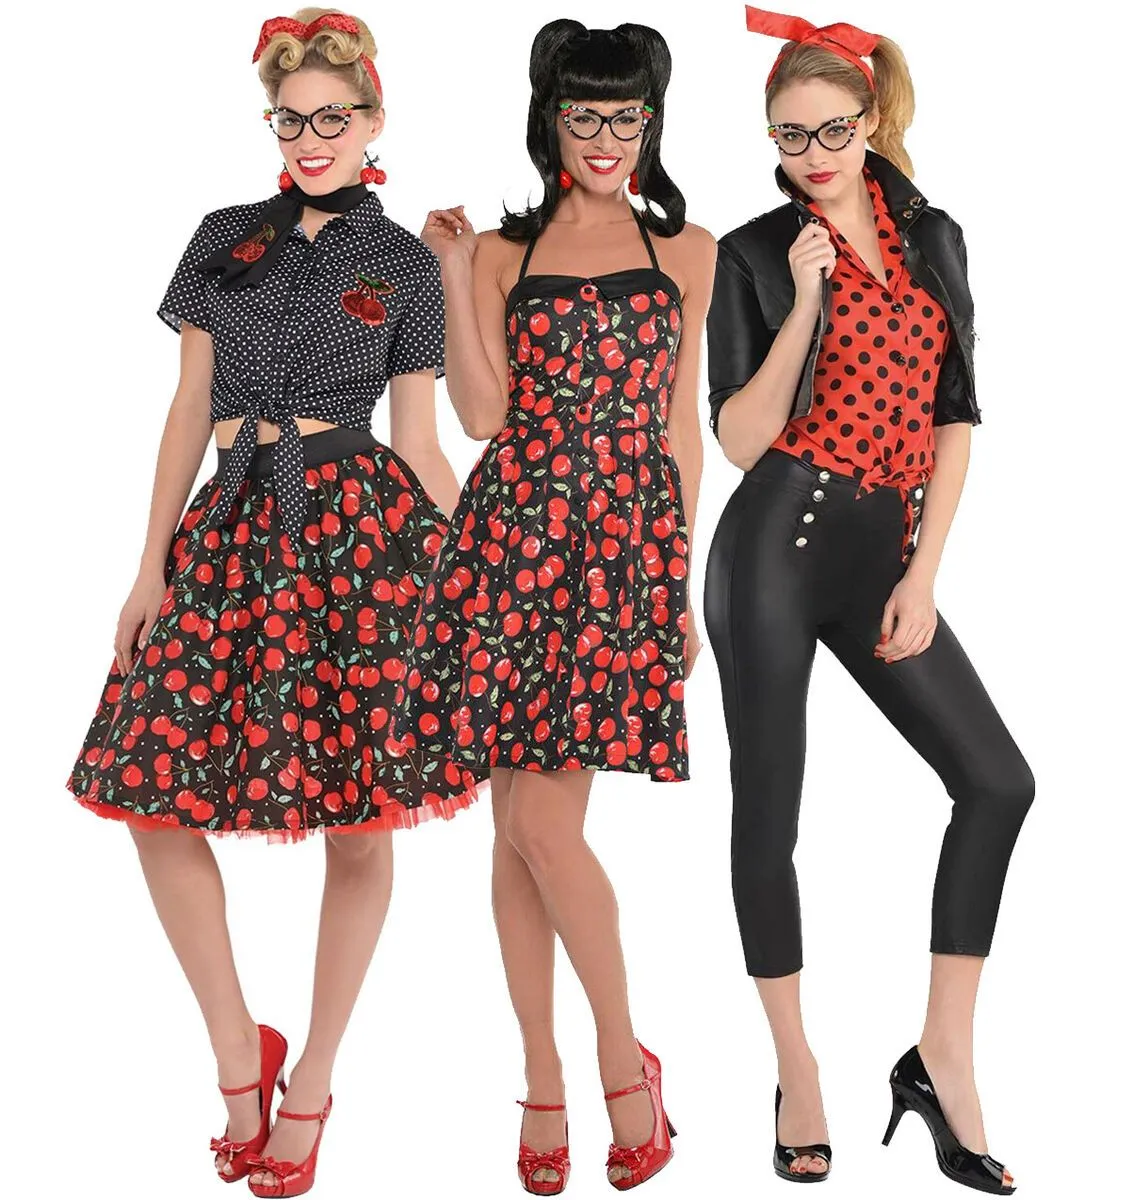 LADIES 1950S FANCY DRESS COSTUME ROCK N ROLL WOMENS OUTFIT 50S 60S FILM  MOVIE | eBay